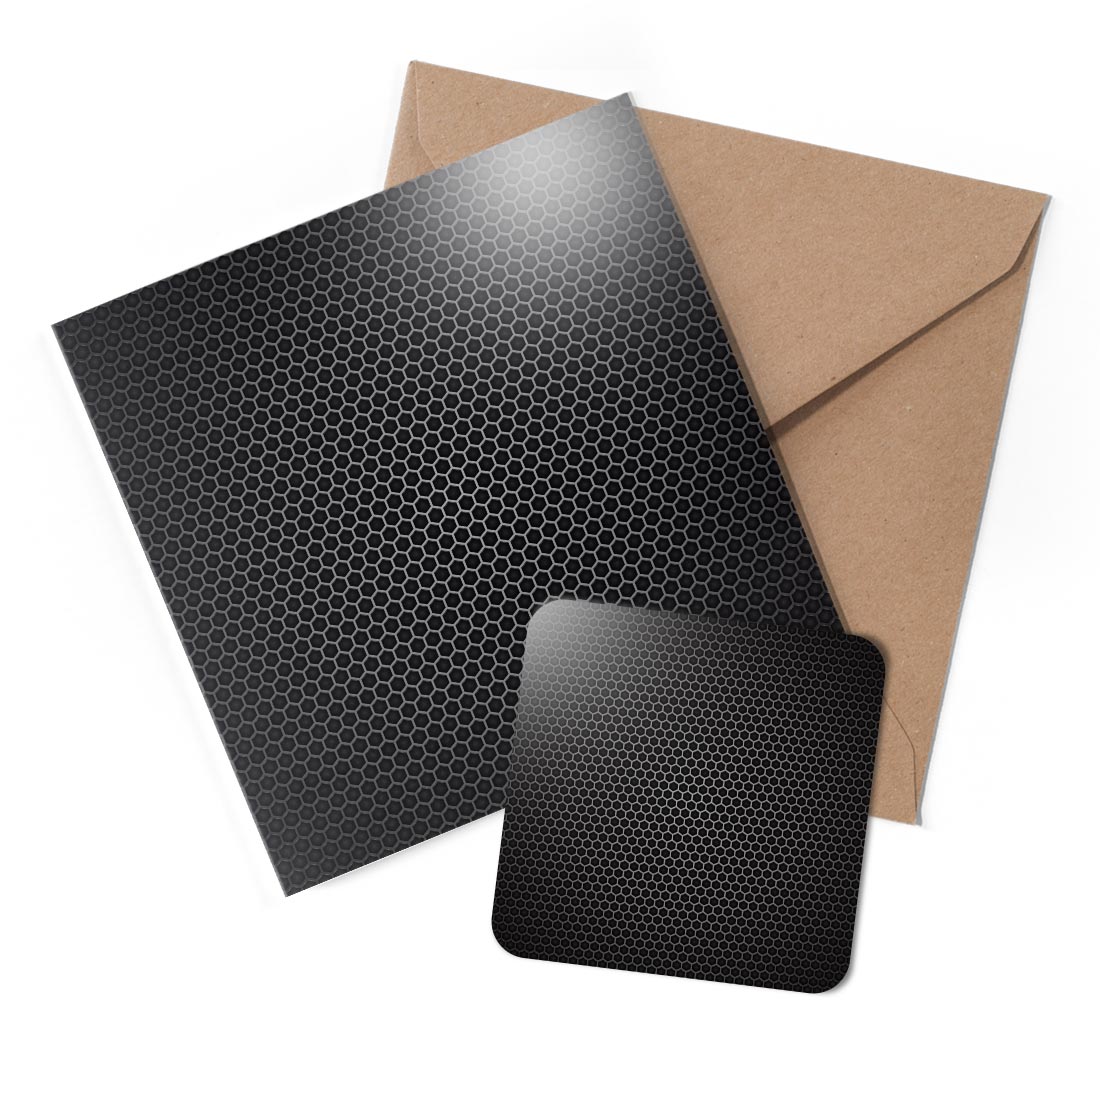 1 x Greeting Card & Coaster Set - Cool Black Honeycomb Pattern #50600